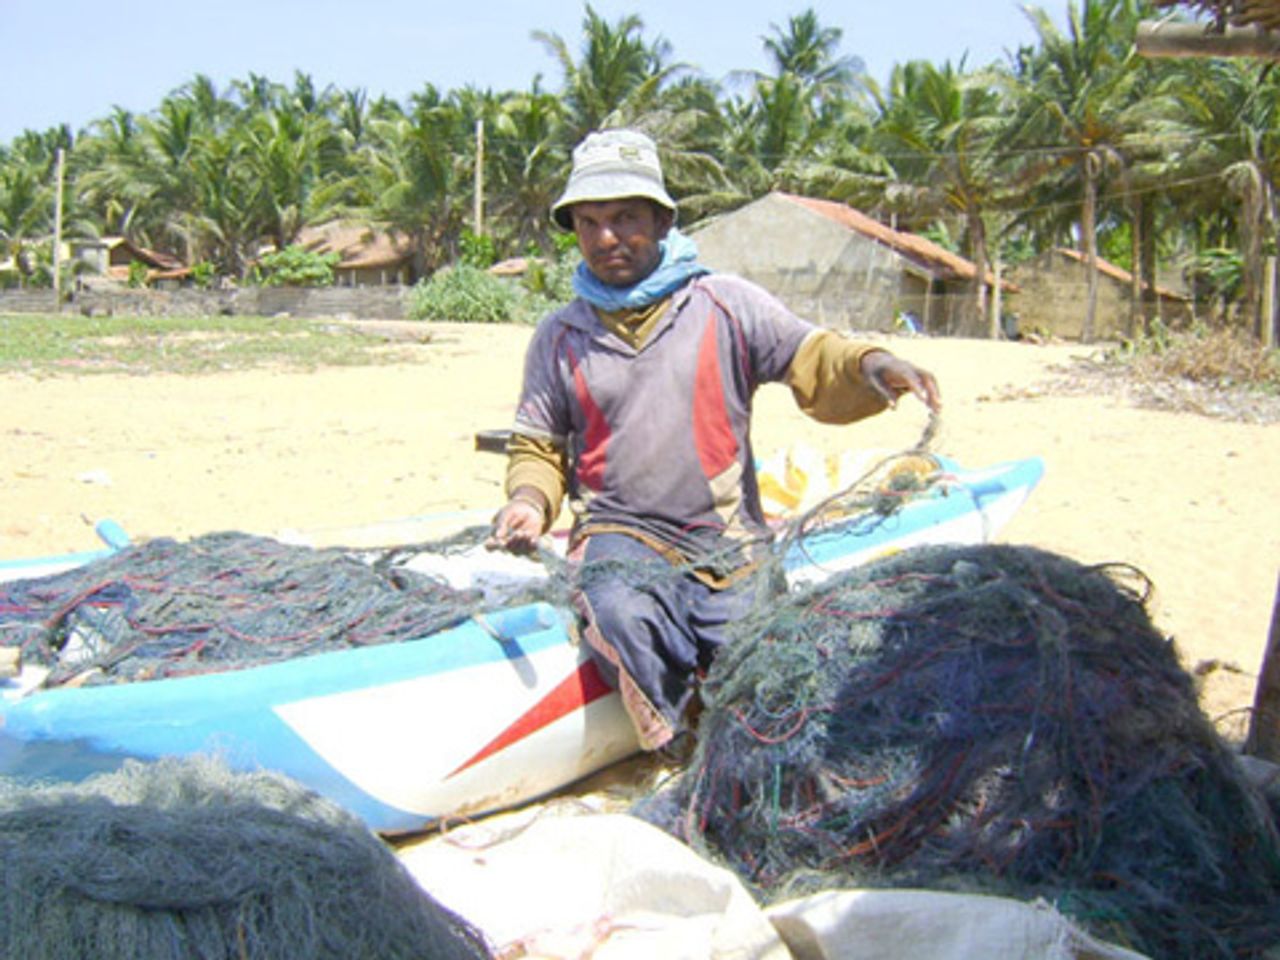 A fisherman preparing his nets